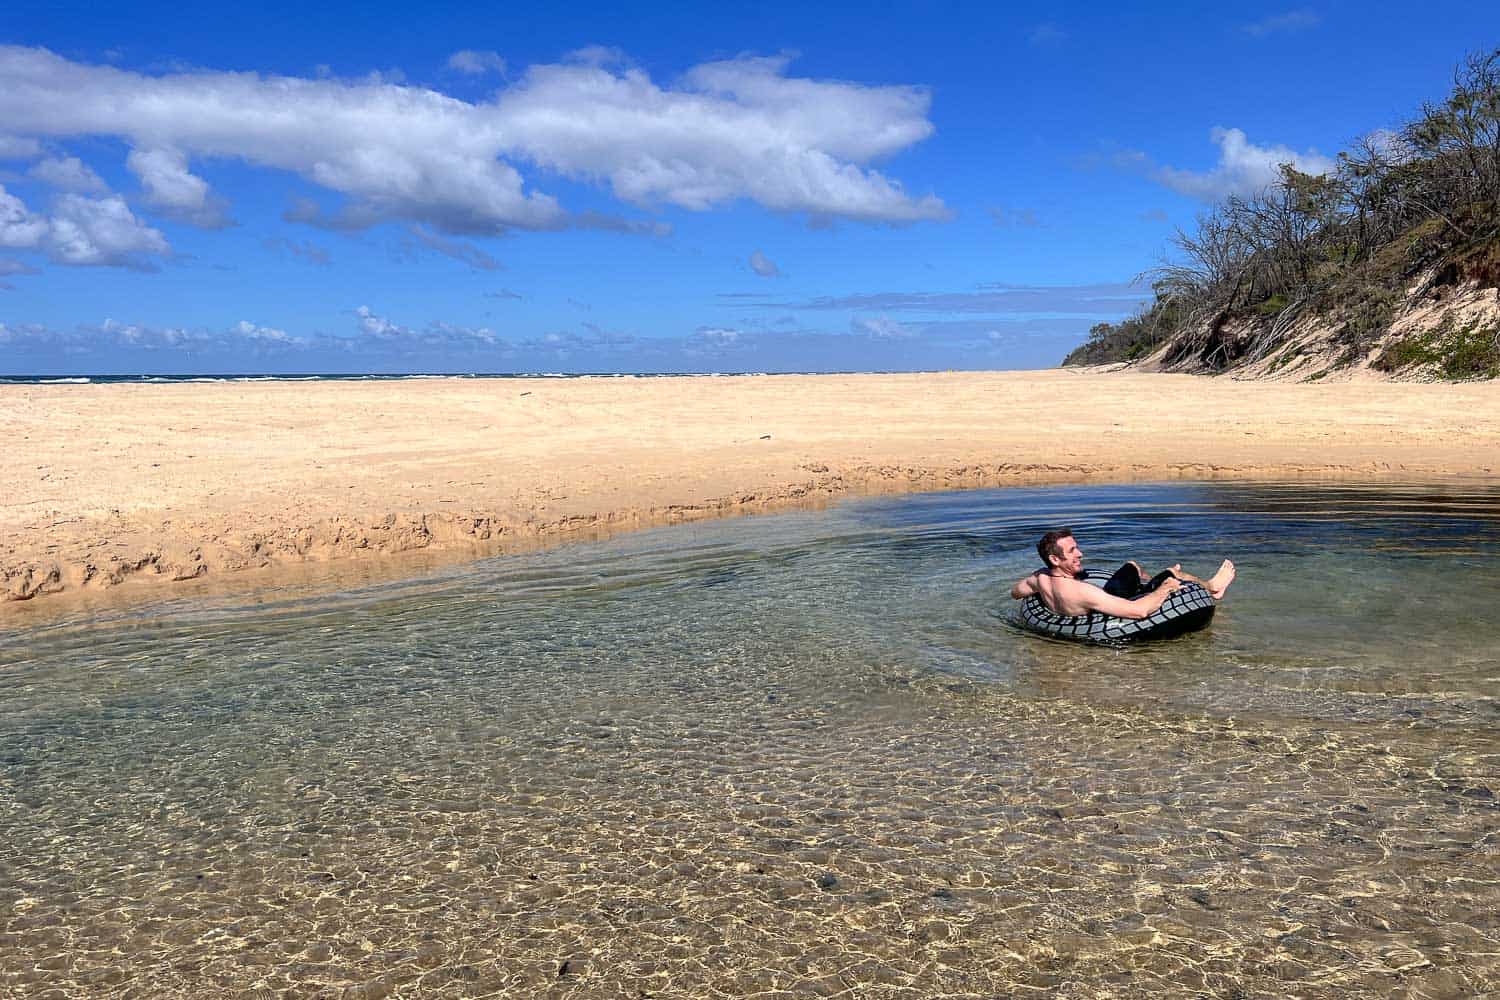 Simon tubing along Eli Creek on 75 Mile beach, K'gari, Queensland, Australia